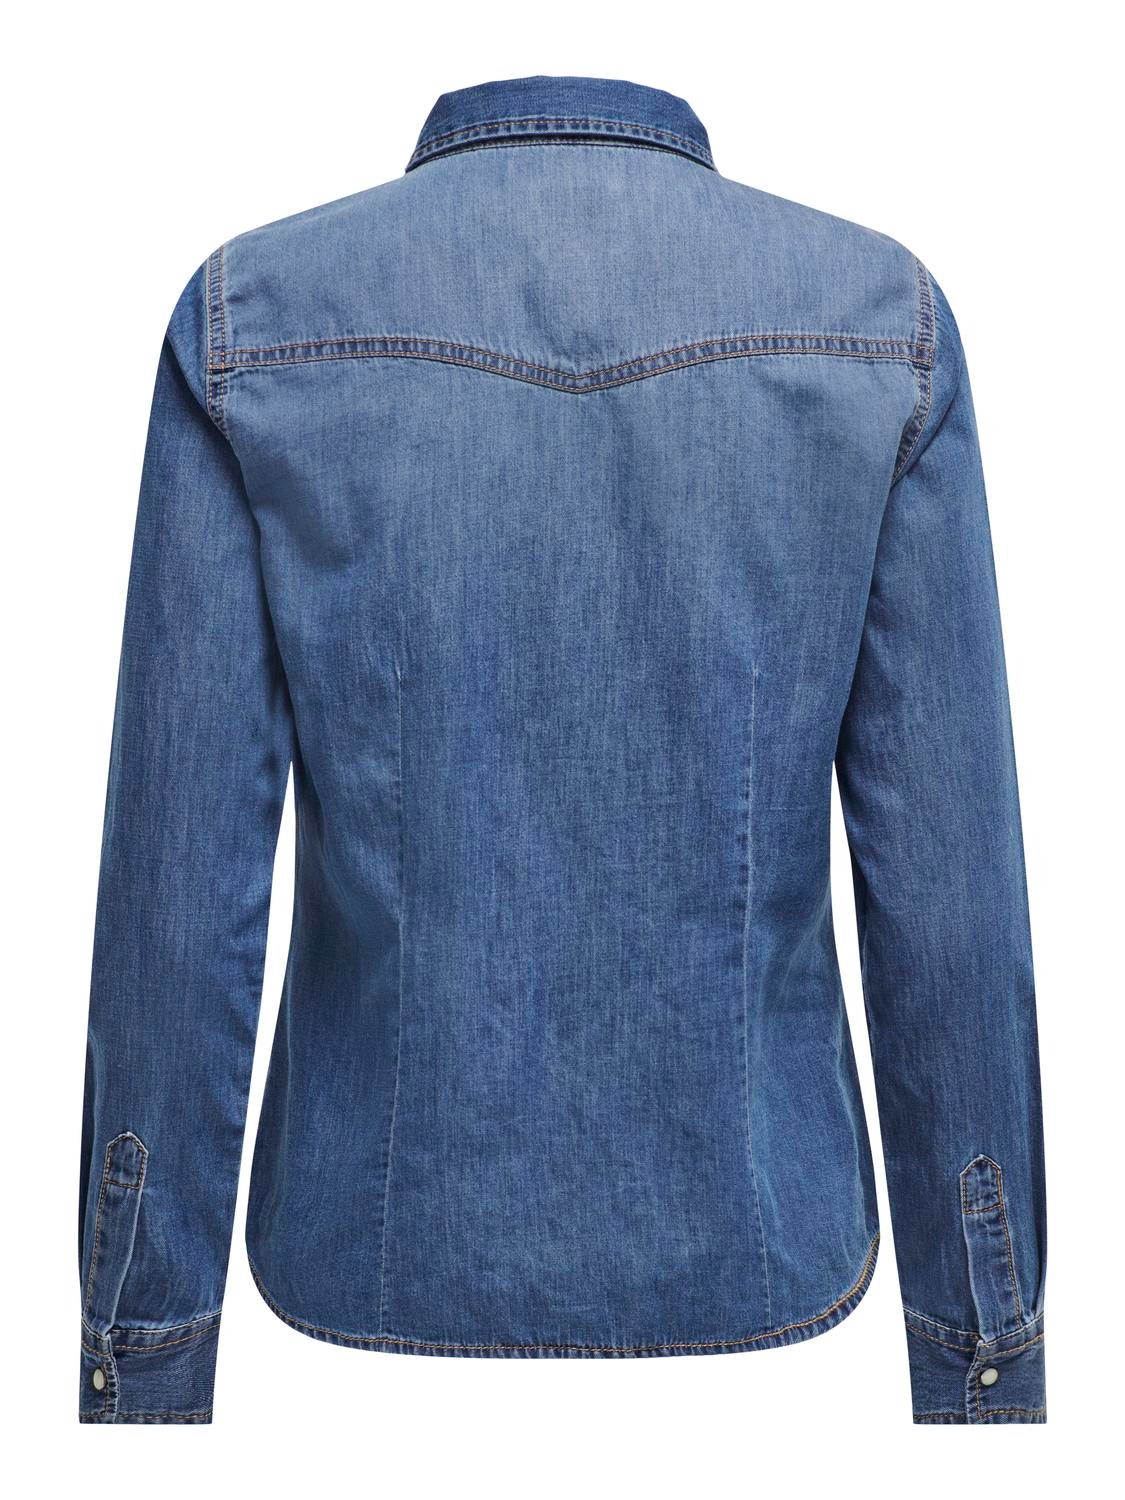 ONLY Chemises Regular Fit Col chemise Poignets boutonnés -Medium Blue Denim - 15315185